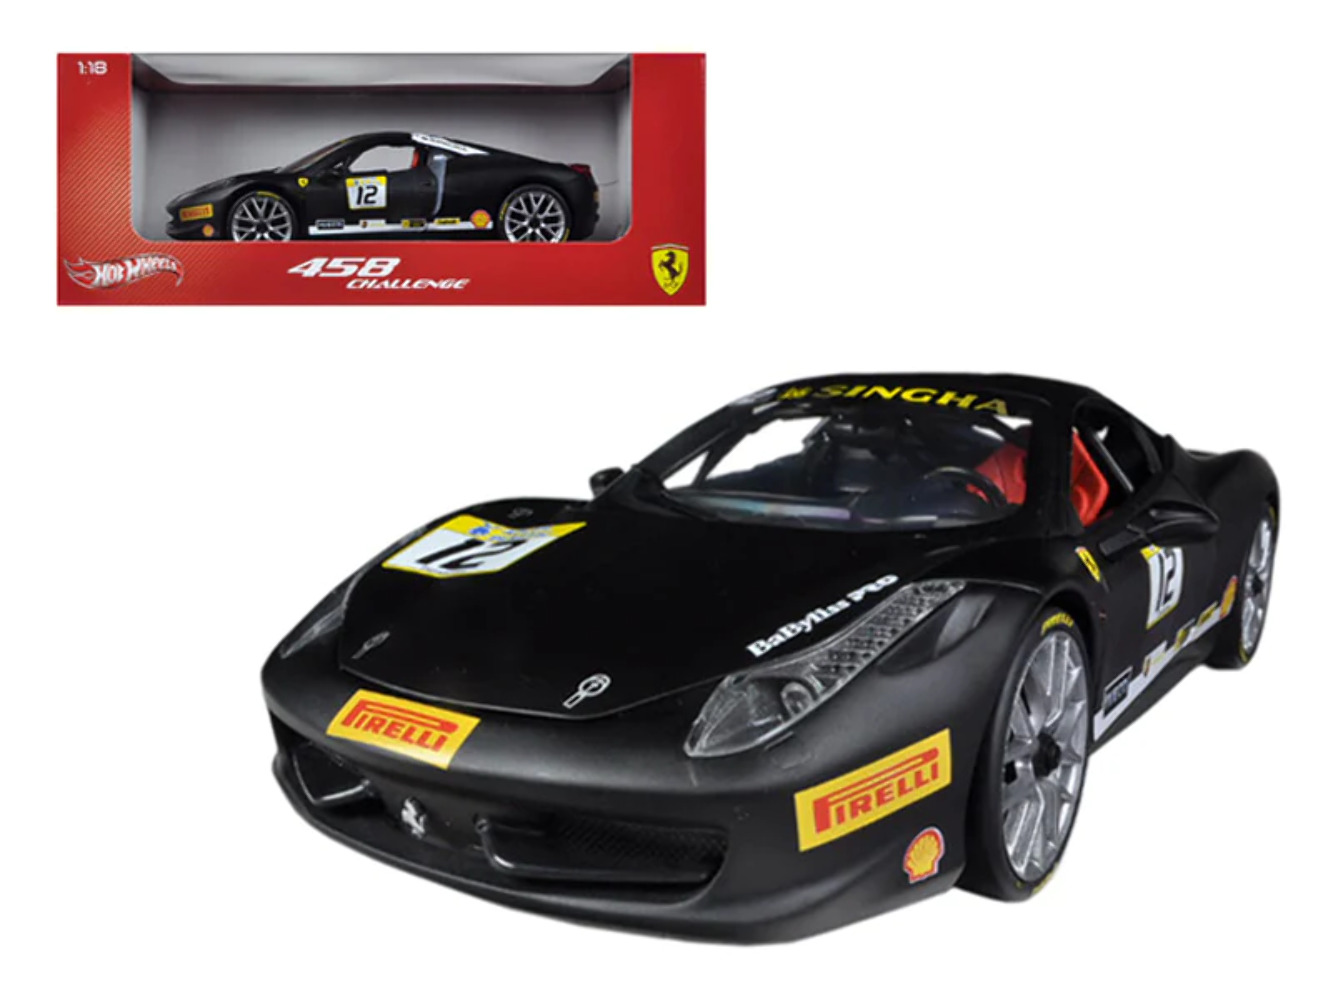 Ferrari 458 Challenge Matt Black #12 1/18 Diecast Car Model